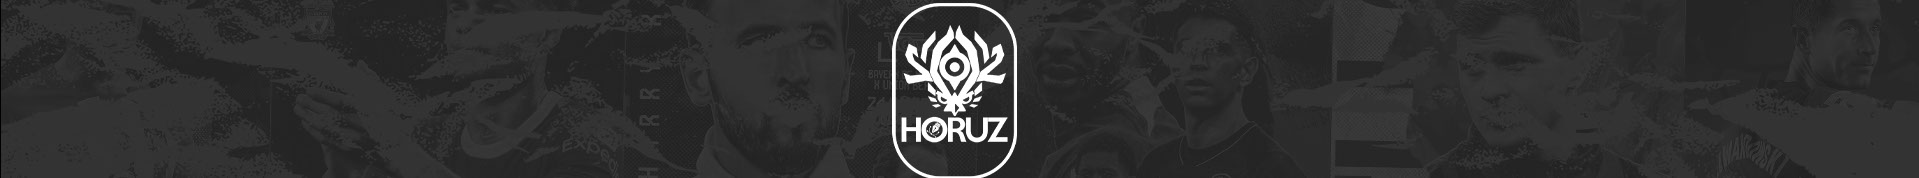 LUCAS HORUZ's profile banner